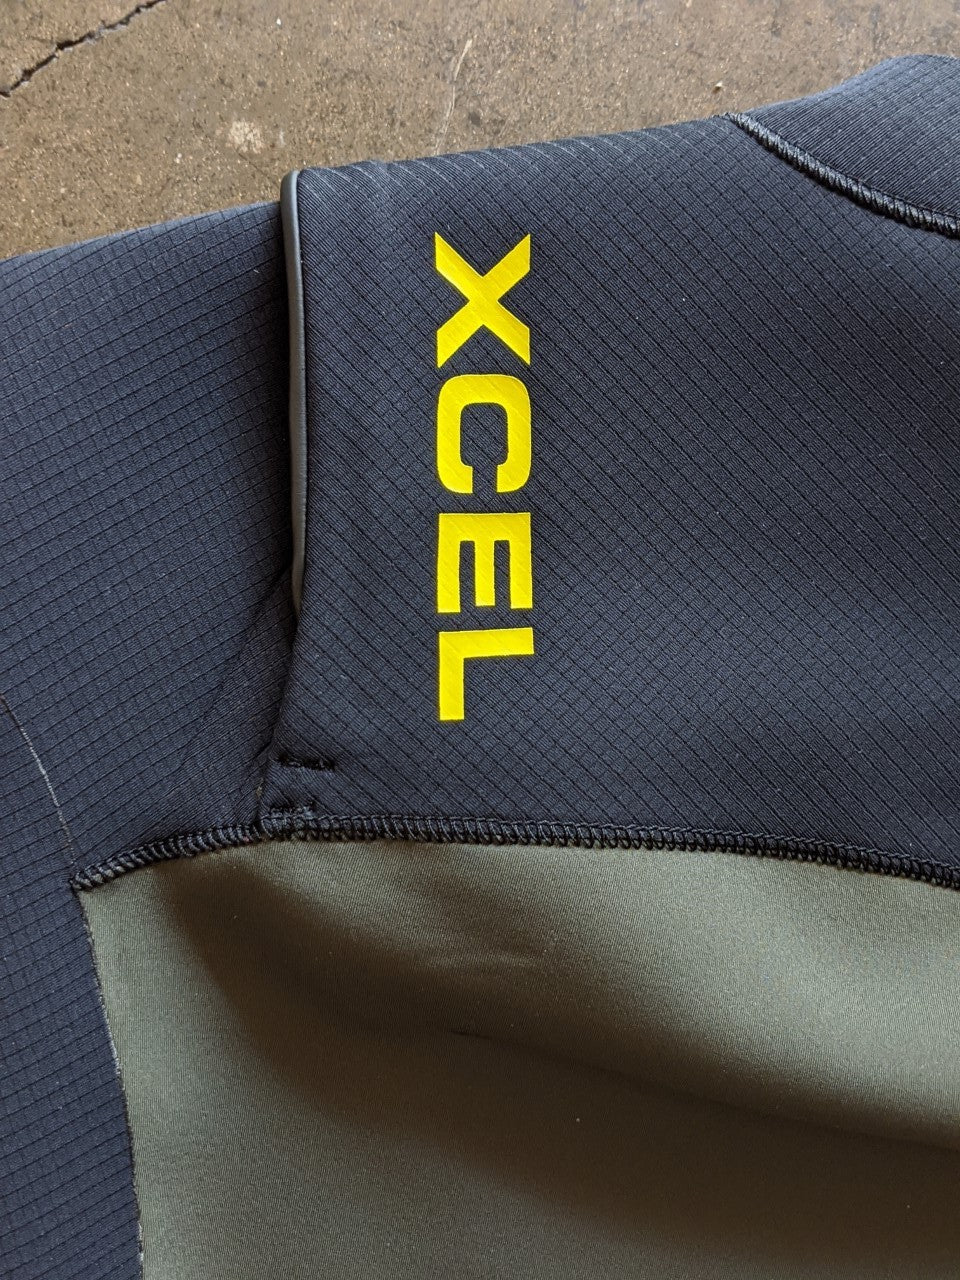 Xcel - Men's Comp X Short Sleeve 2mm - Forest/Black